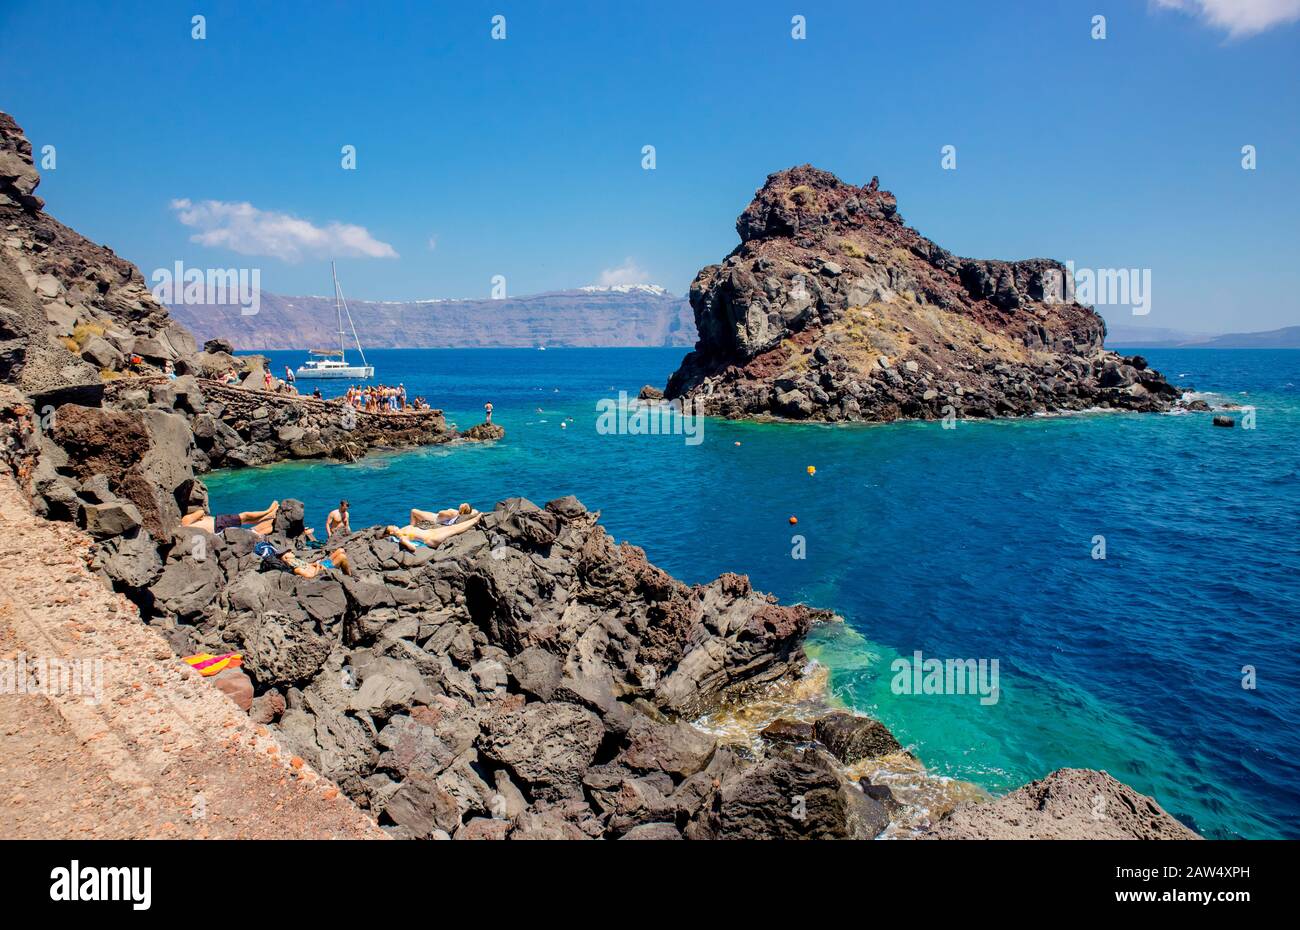 Oia, Santorini/ Greece 14JUL2019-Volcanic beach of Ammoudy Bay. Sisterhood of the traveling pants filming location. People tourists swimming and sunba Stock Photo